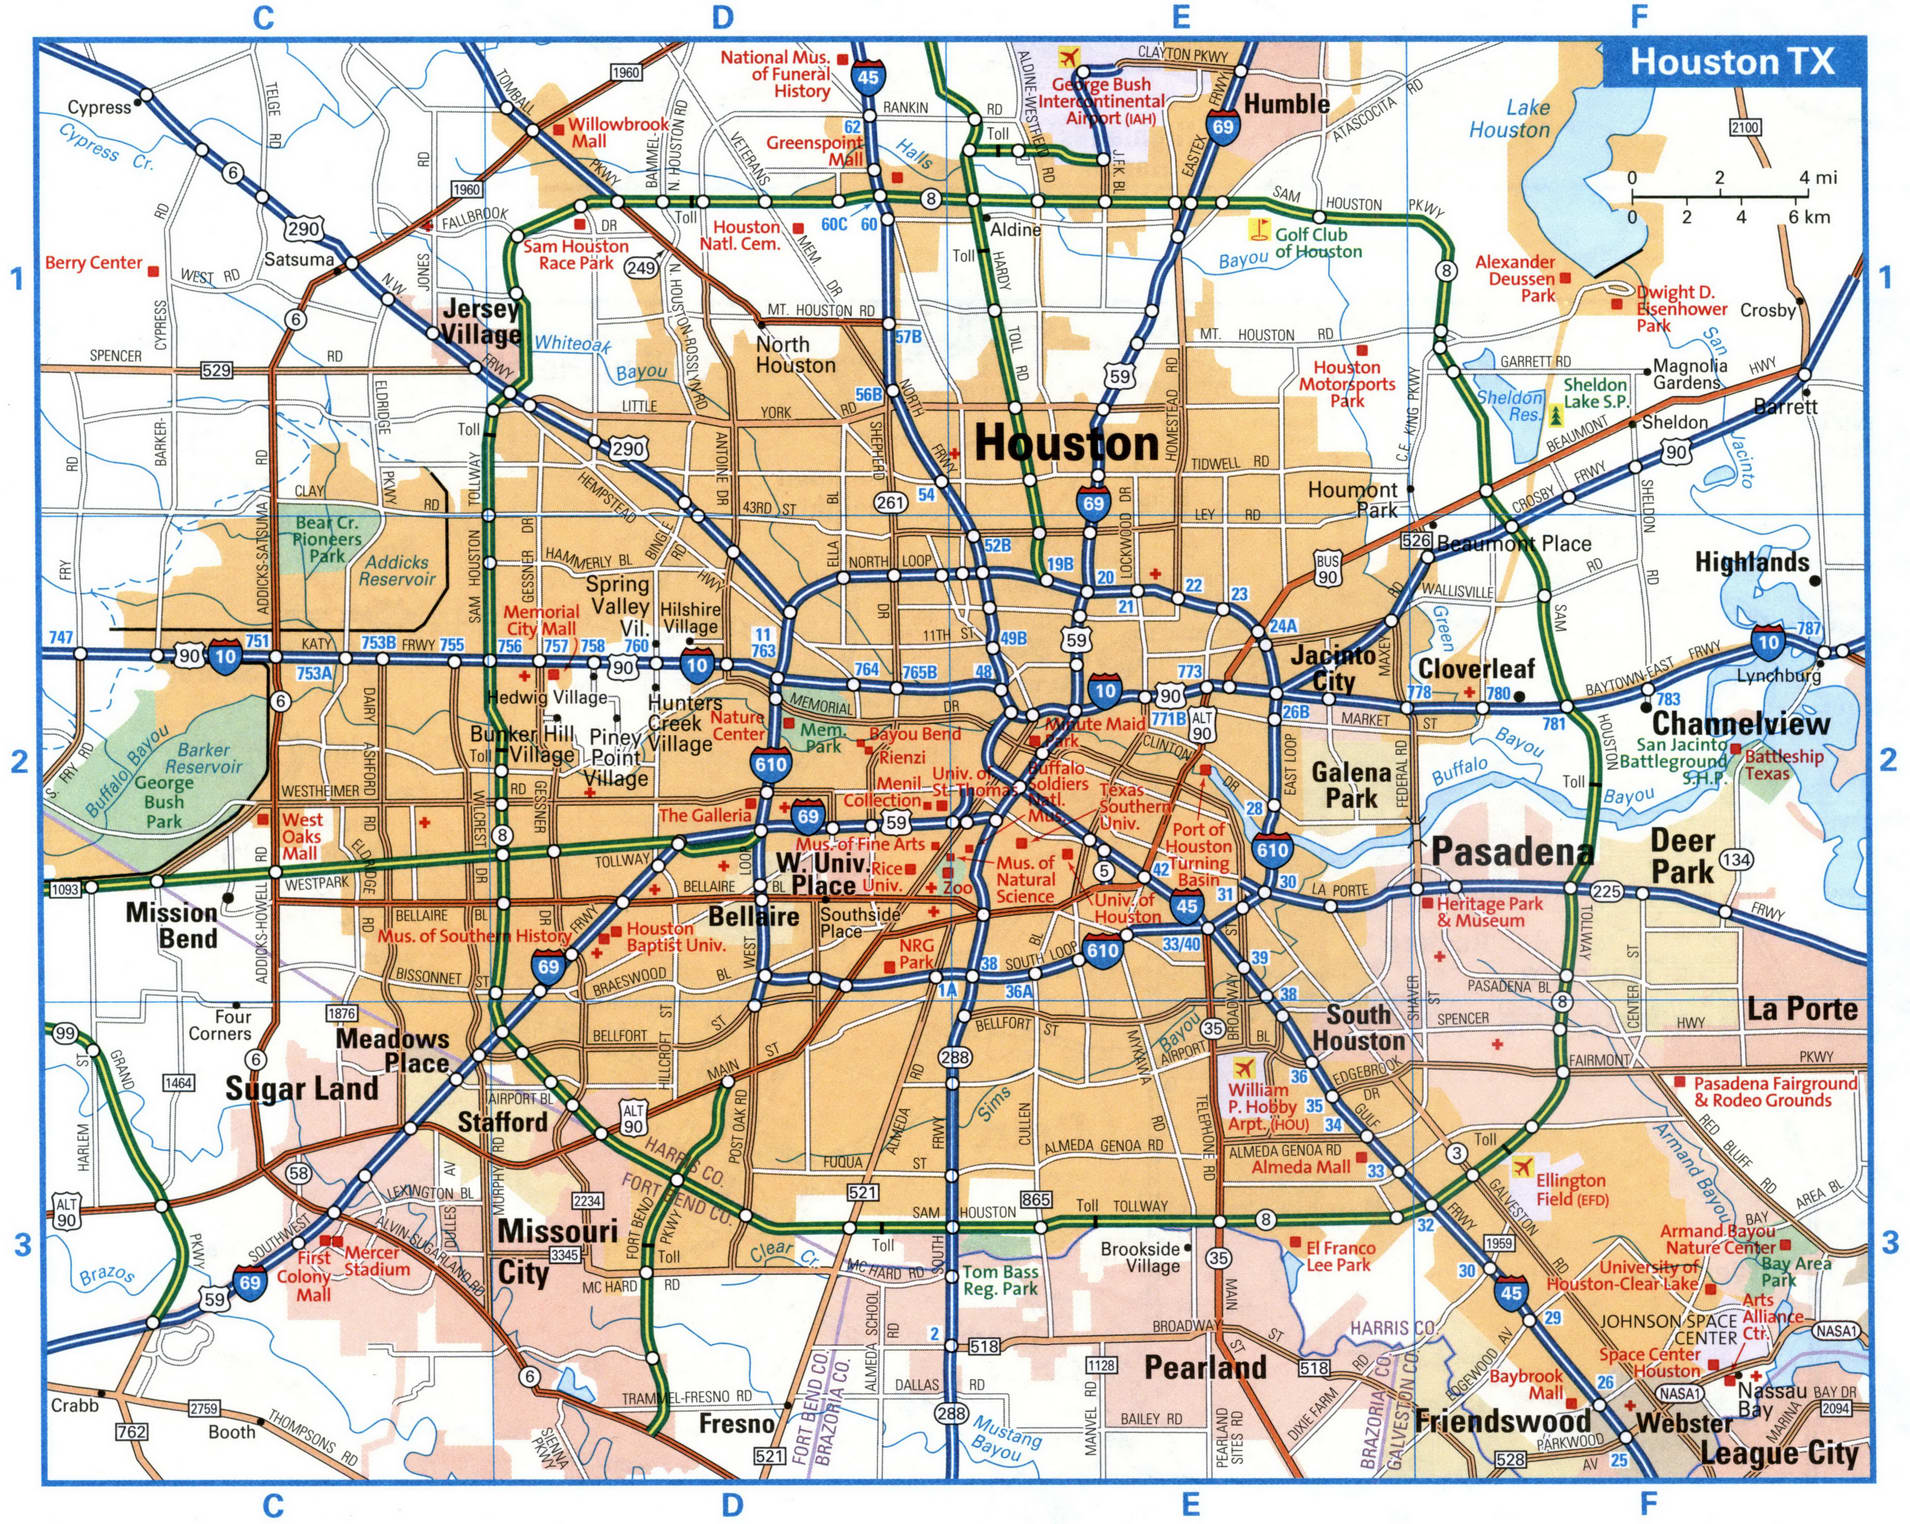 Houston city interstate highway map road free toll I10, I45, I69, I610 ...